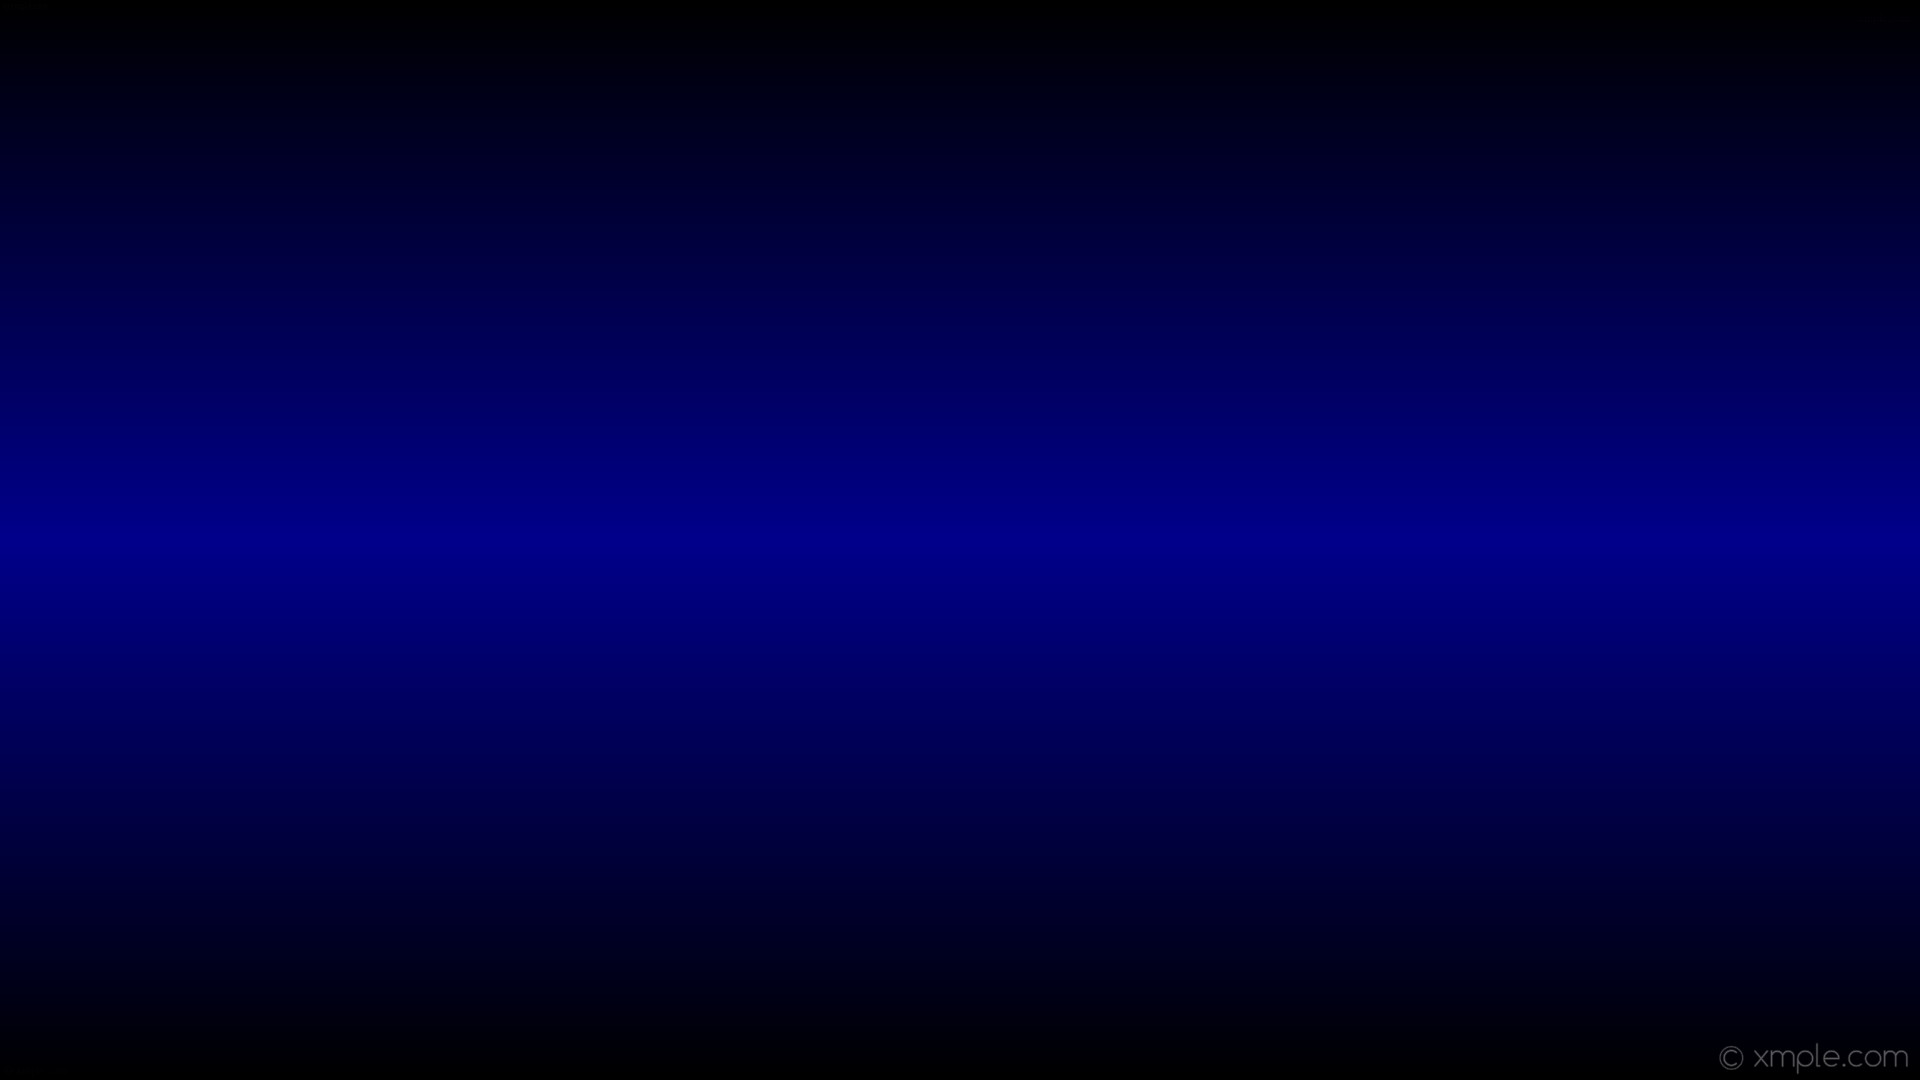 1920x1080 wallpaper linear black highlight blue gradient dark blue #000000 #00008b  270Â° 50%